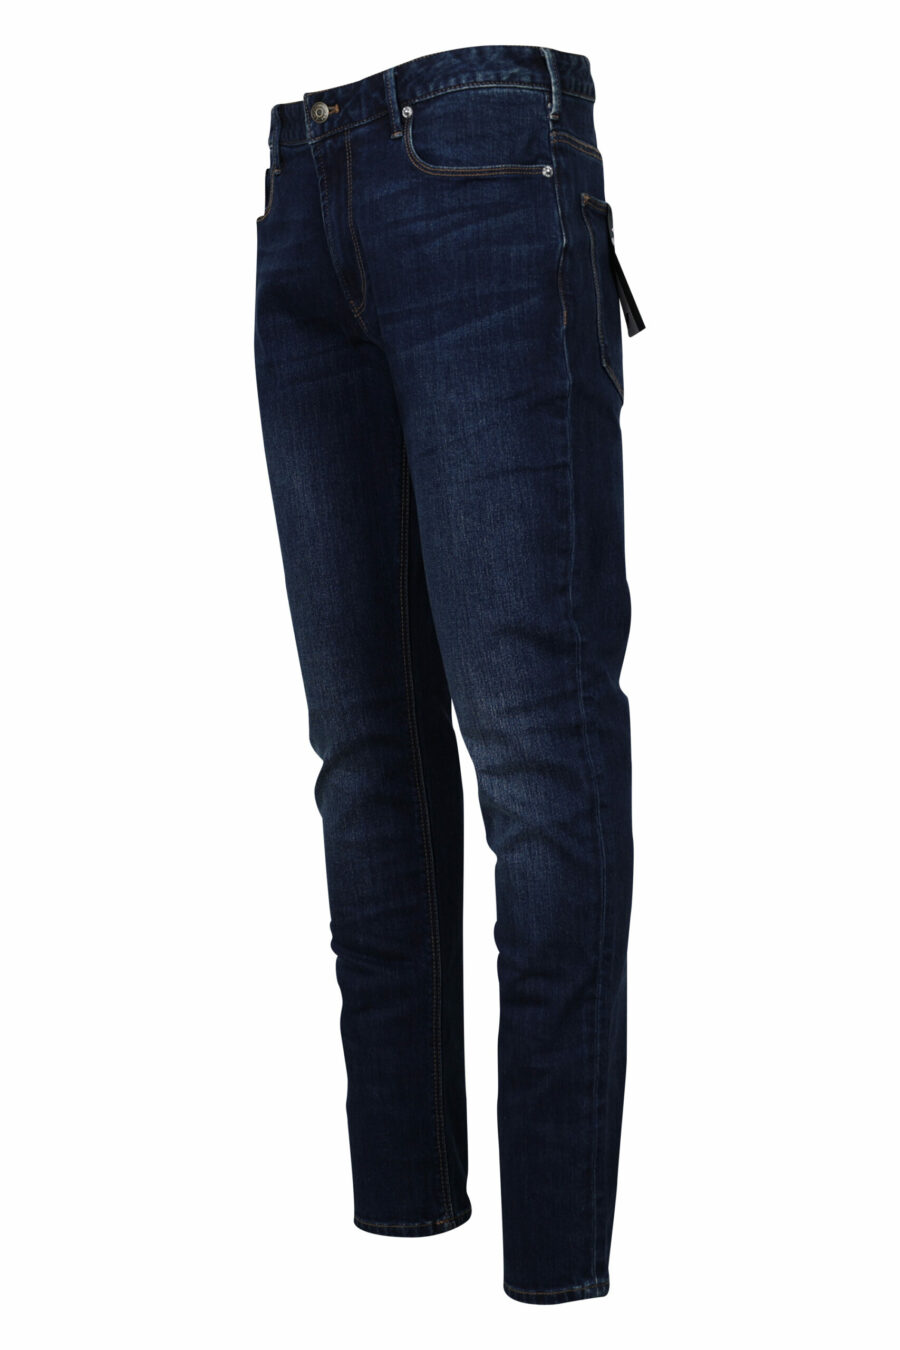 Dunkelblaue Jeans mit Metalladler-Logo - 8057767476106 1 skaliert